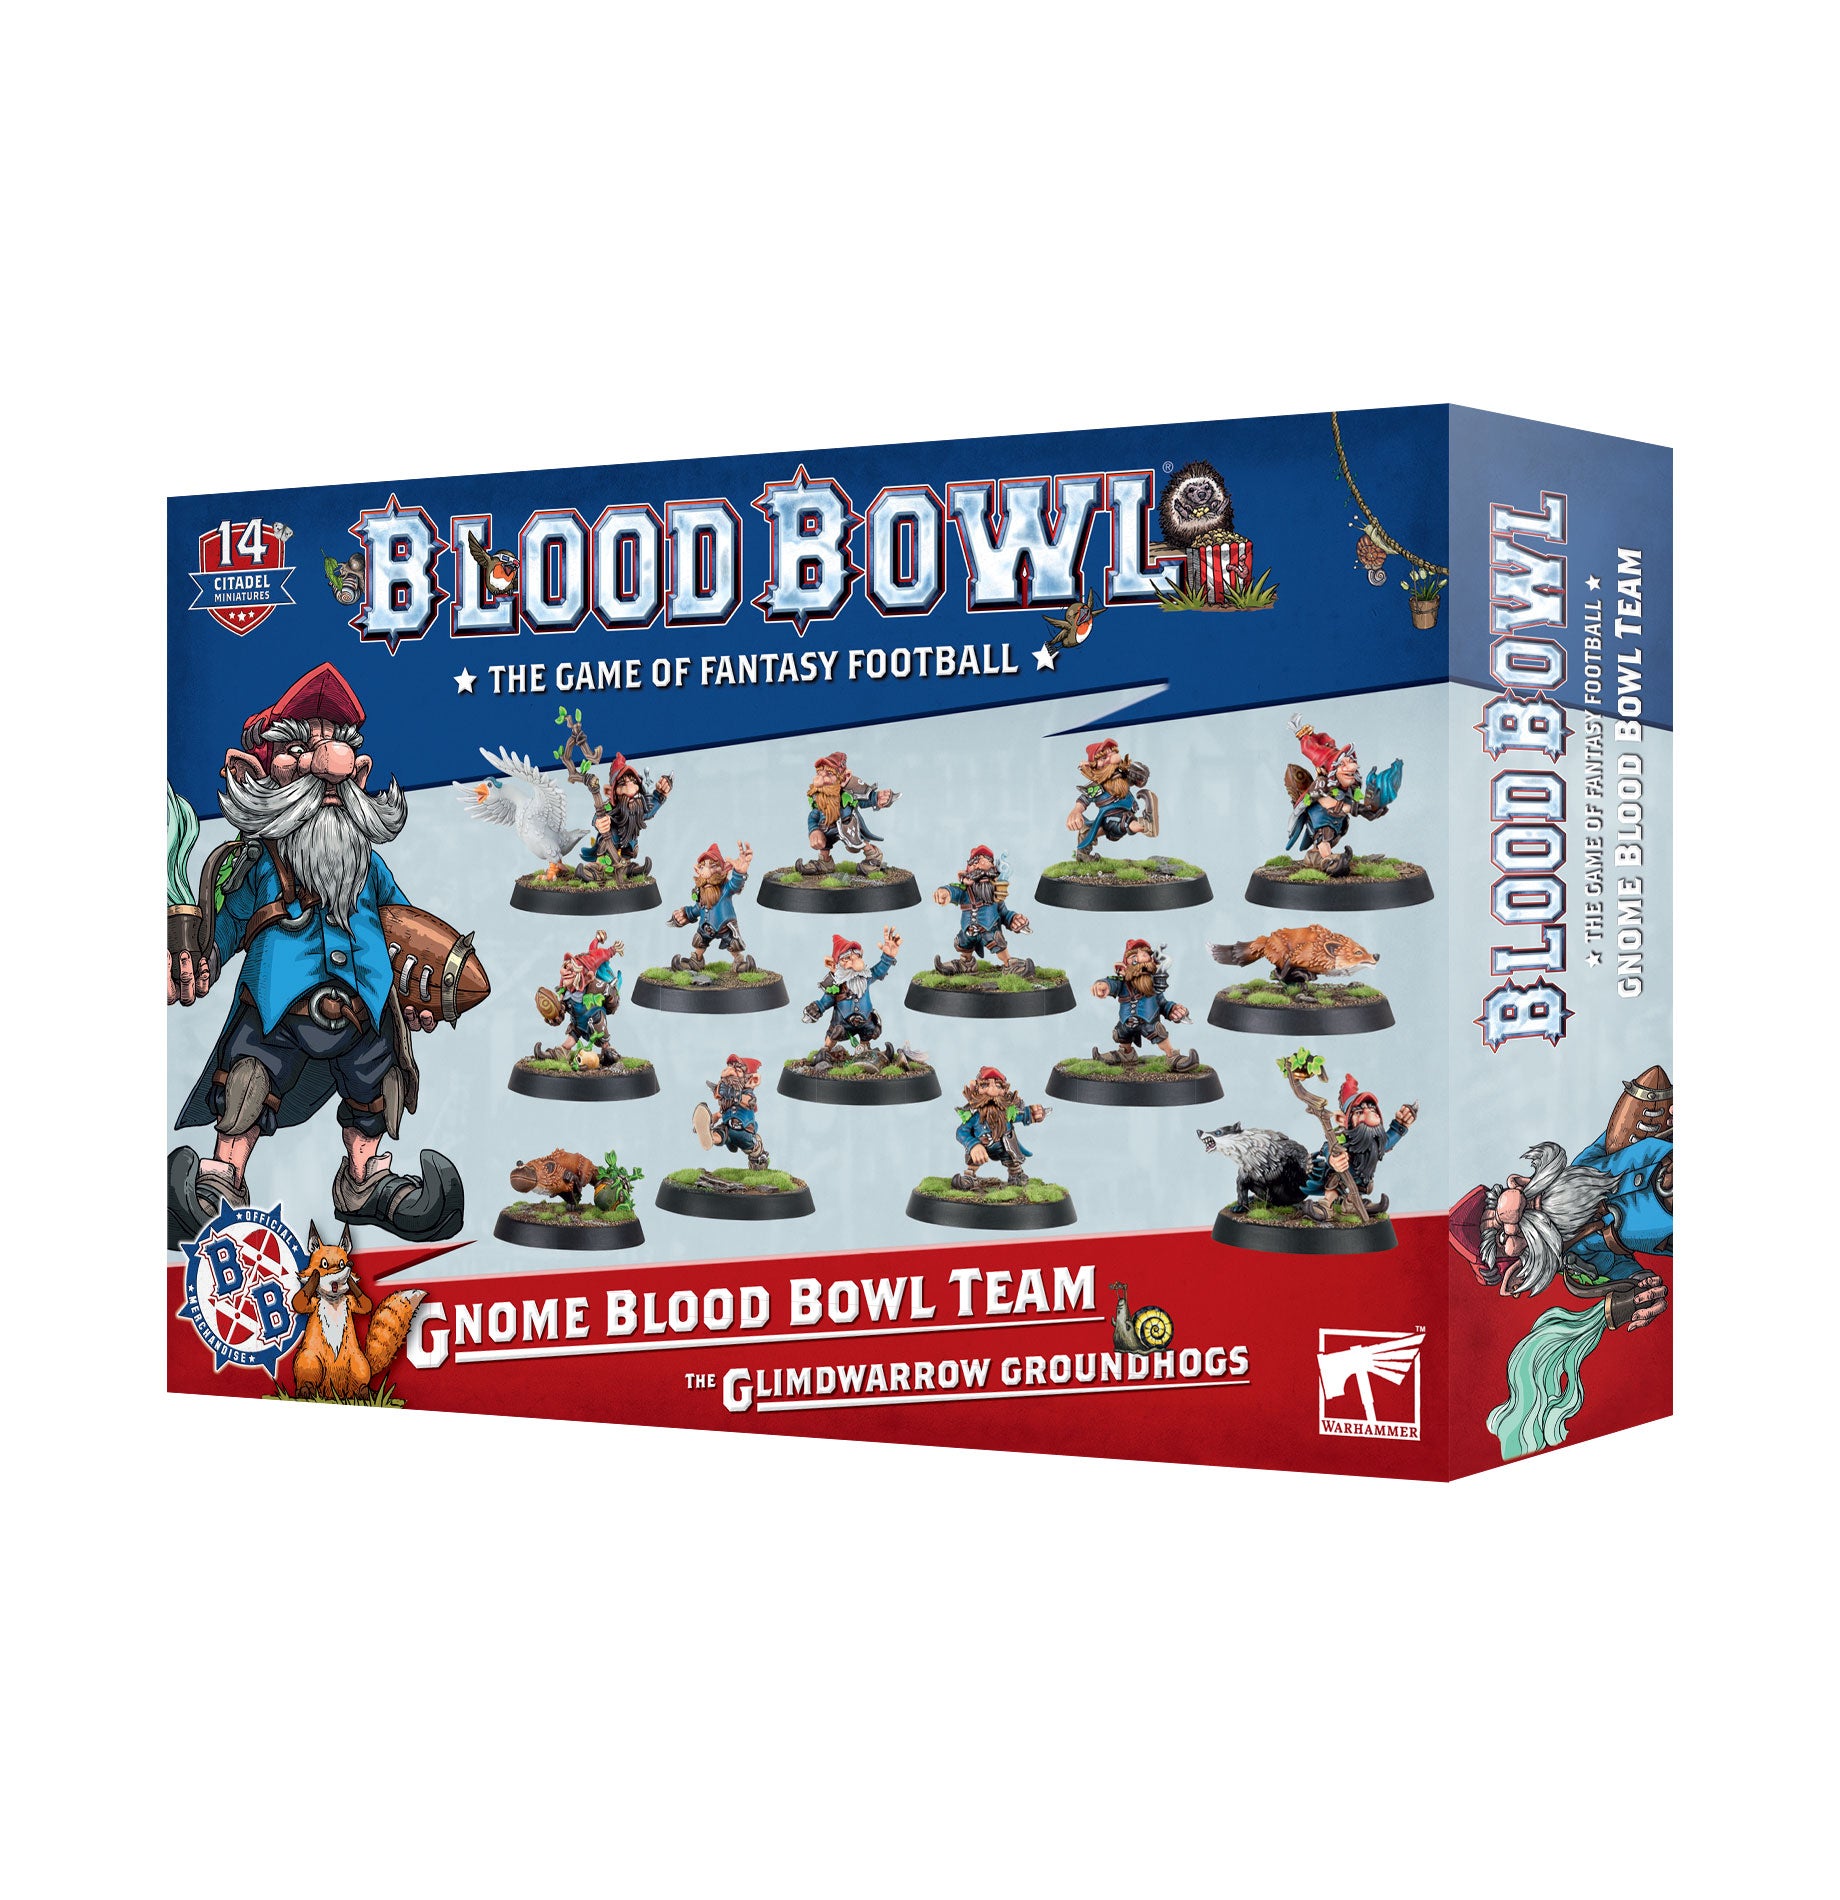 The Glimdwarrow Groundhogs - Gnome Blood Bowl Team MKSU5BEO7A |0|